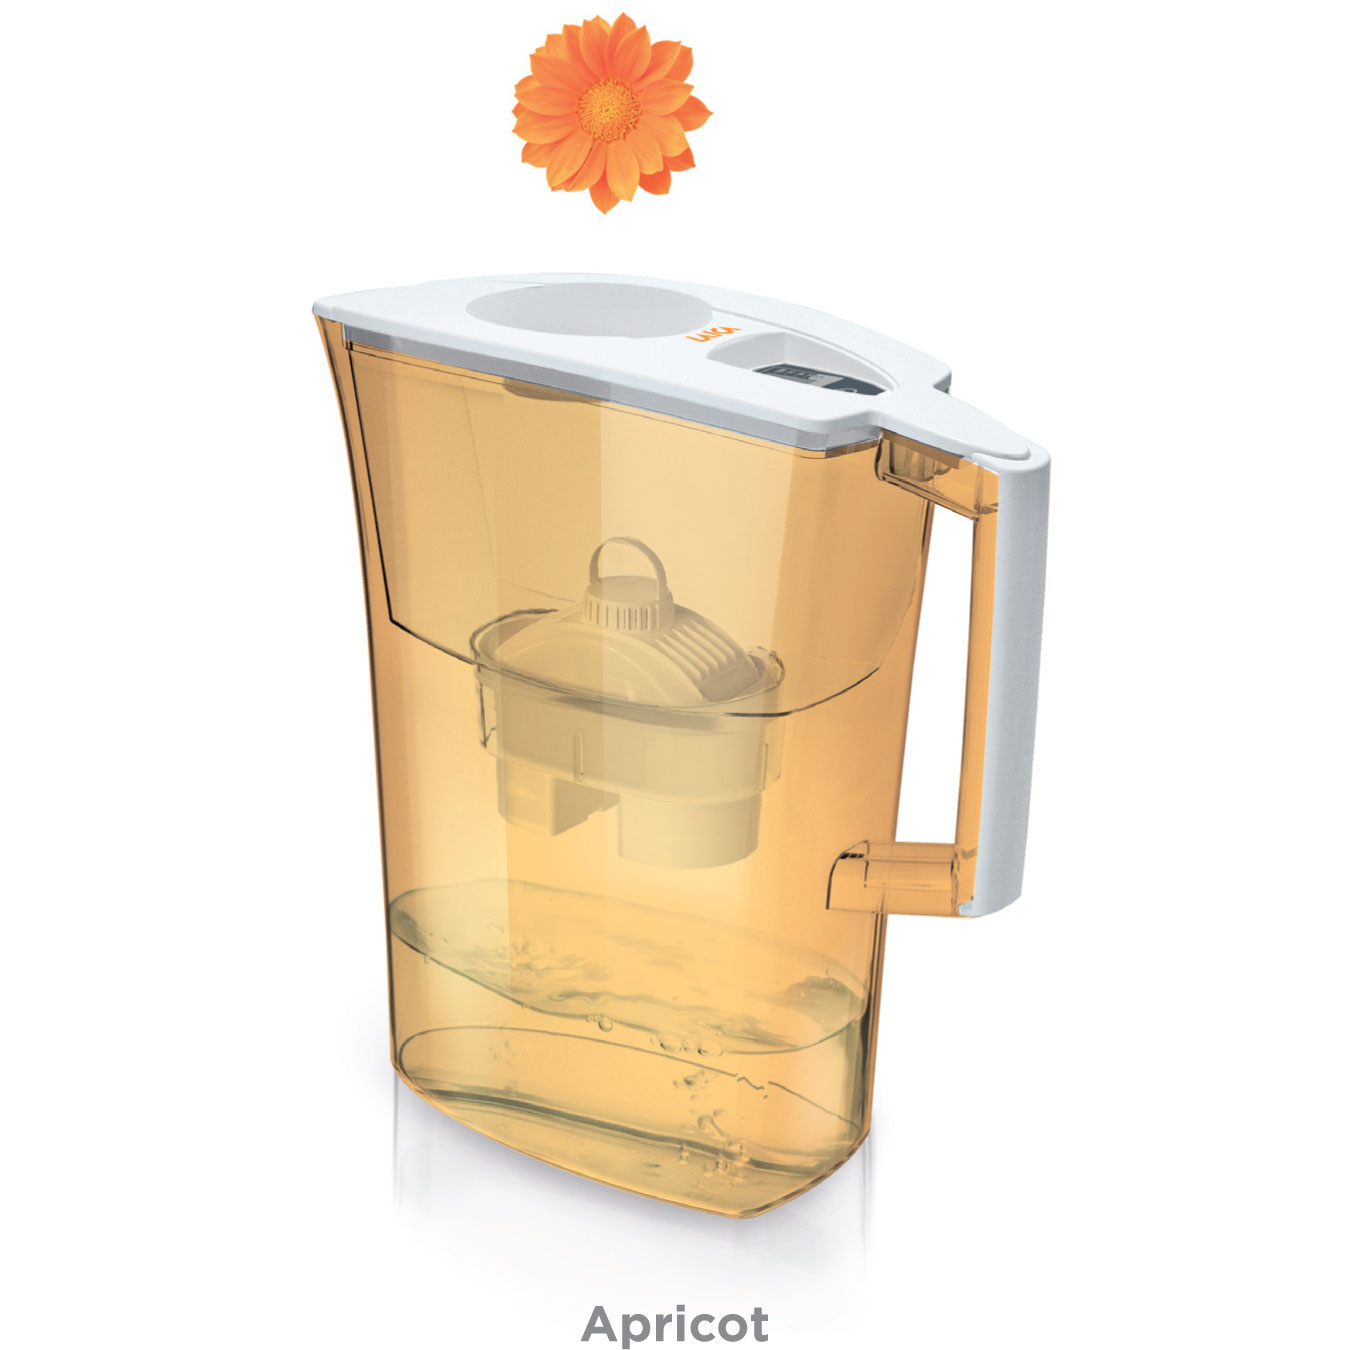 Cana filtranta de apa Laica Spring Apricot, 3 litri Laica